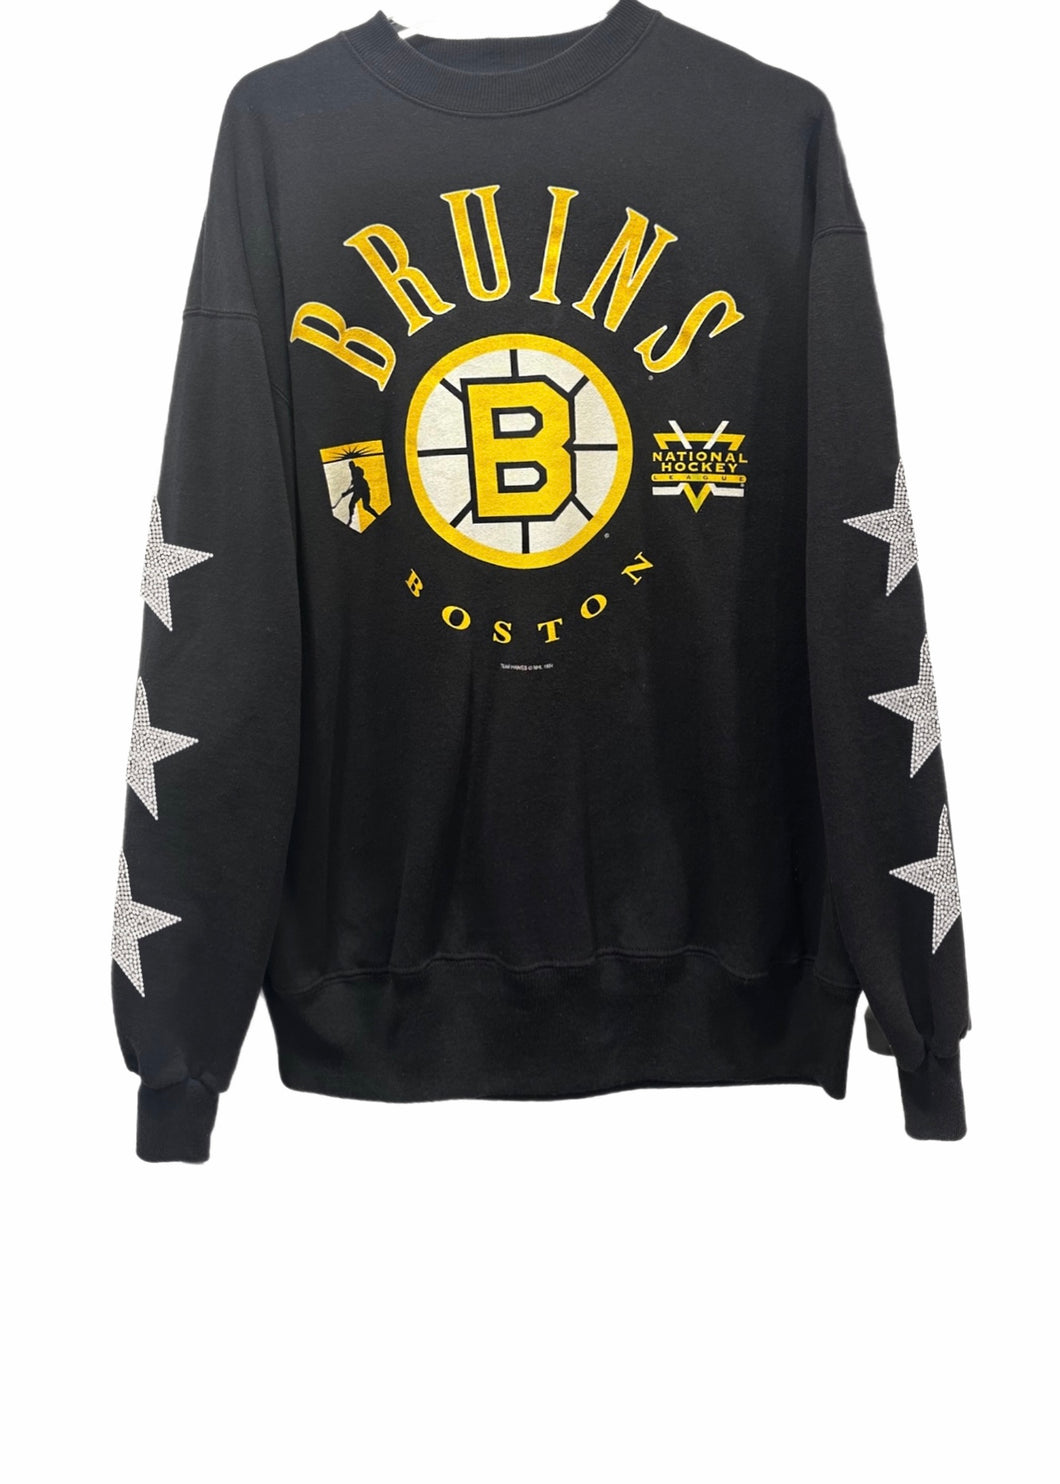 Boston Bruins, NHL One of a KIND Vintage Sweatshirt with Three Crystal Stars Design